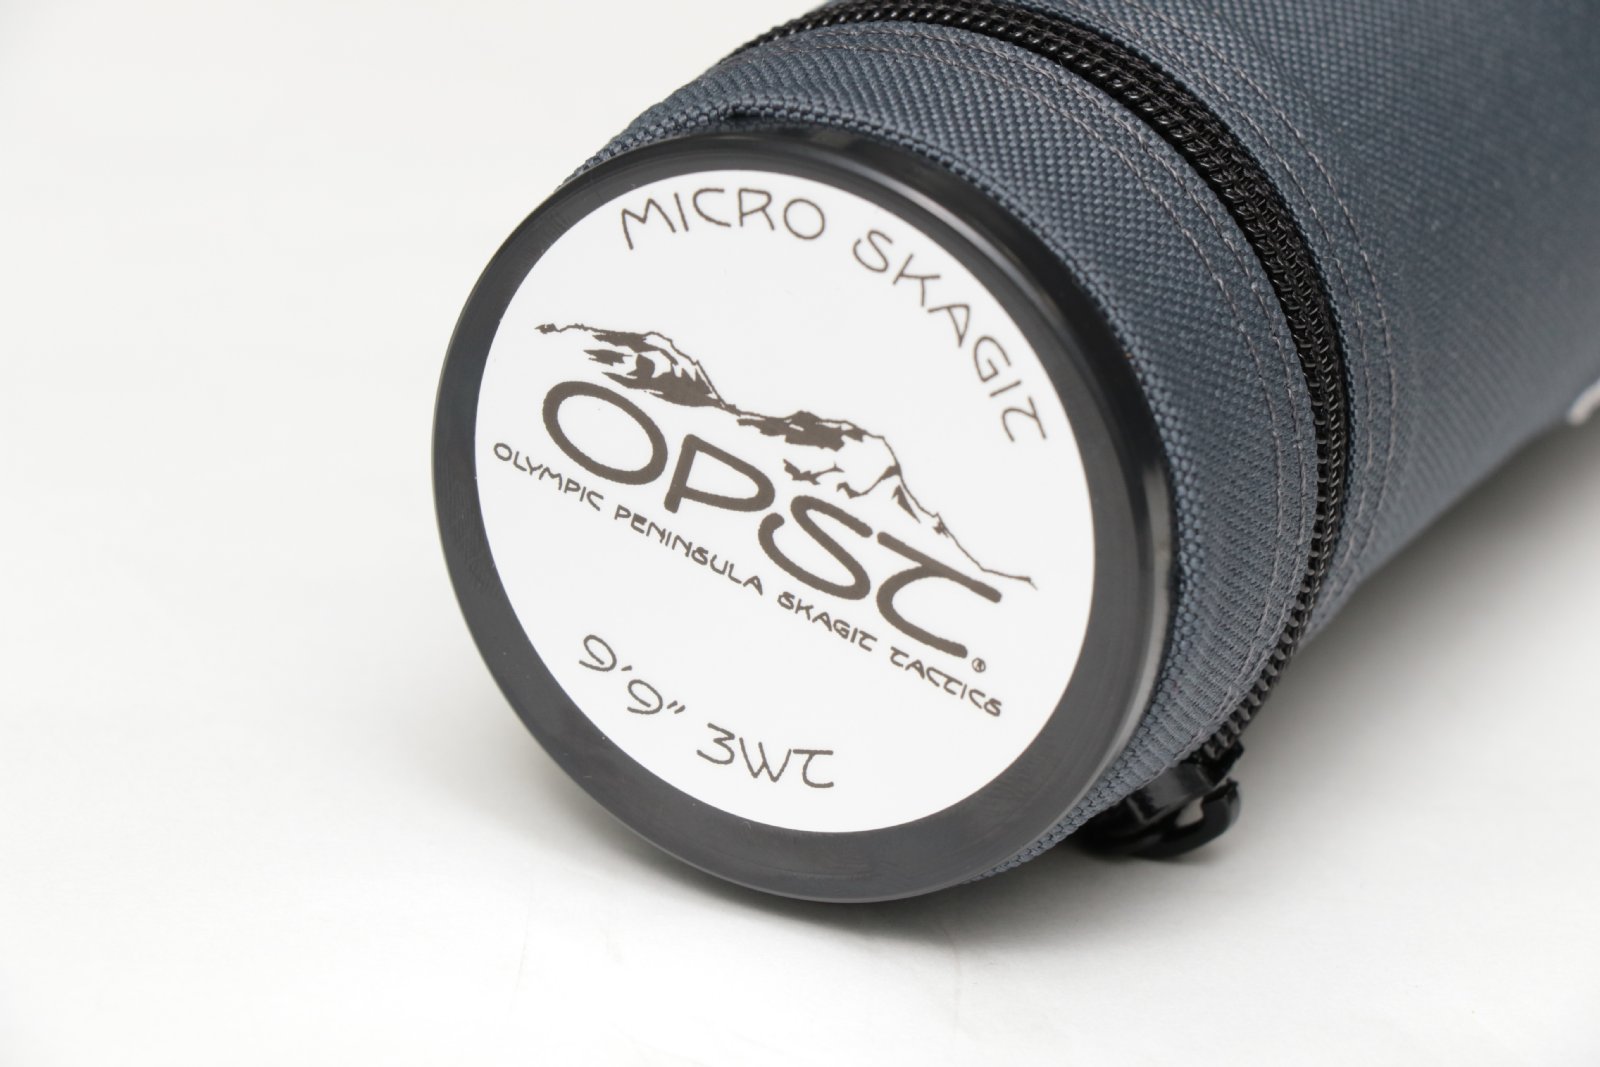 OPST Micro Skagit 10ft 4in 5wt TroutSpey Rod (5104-4)